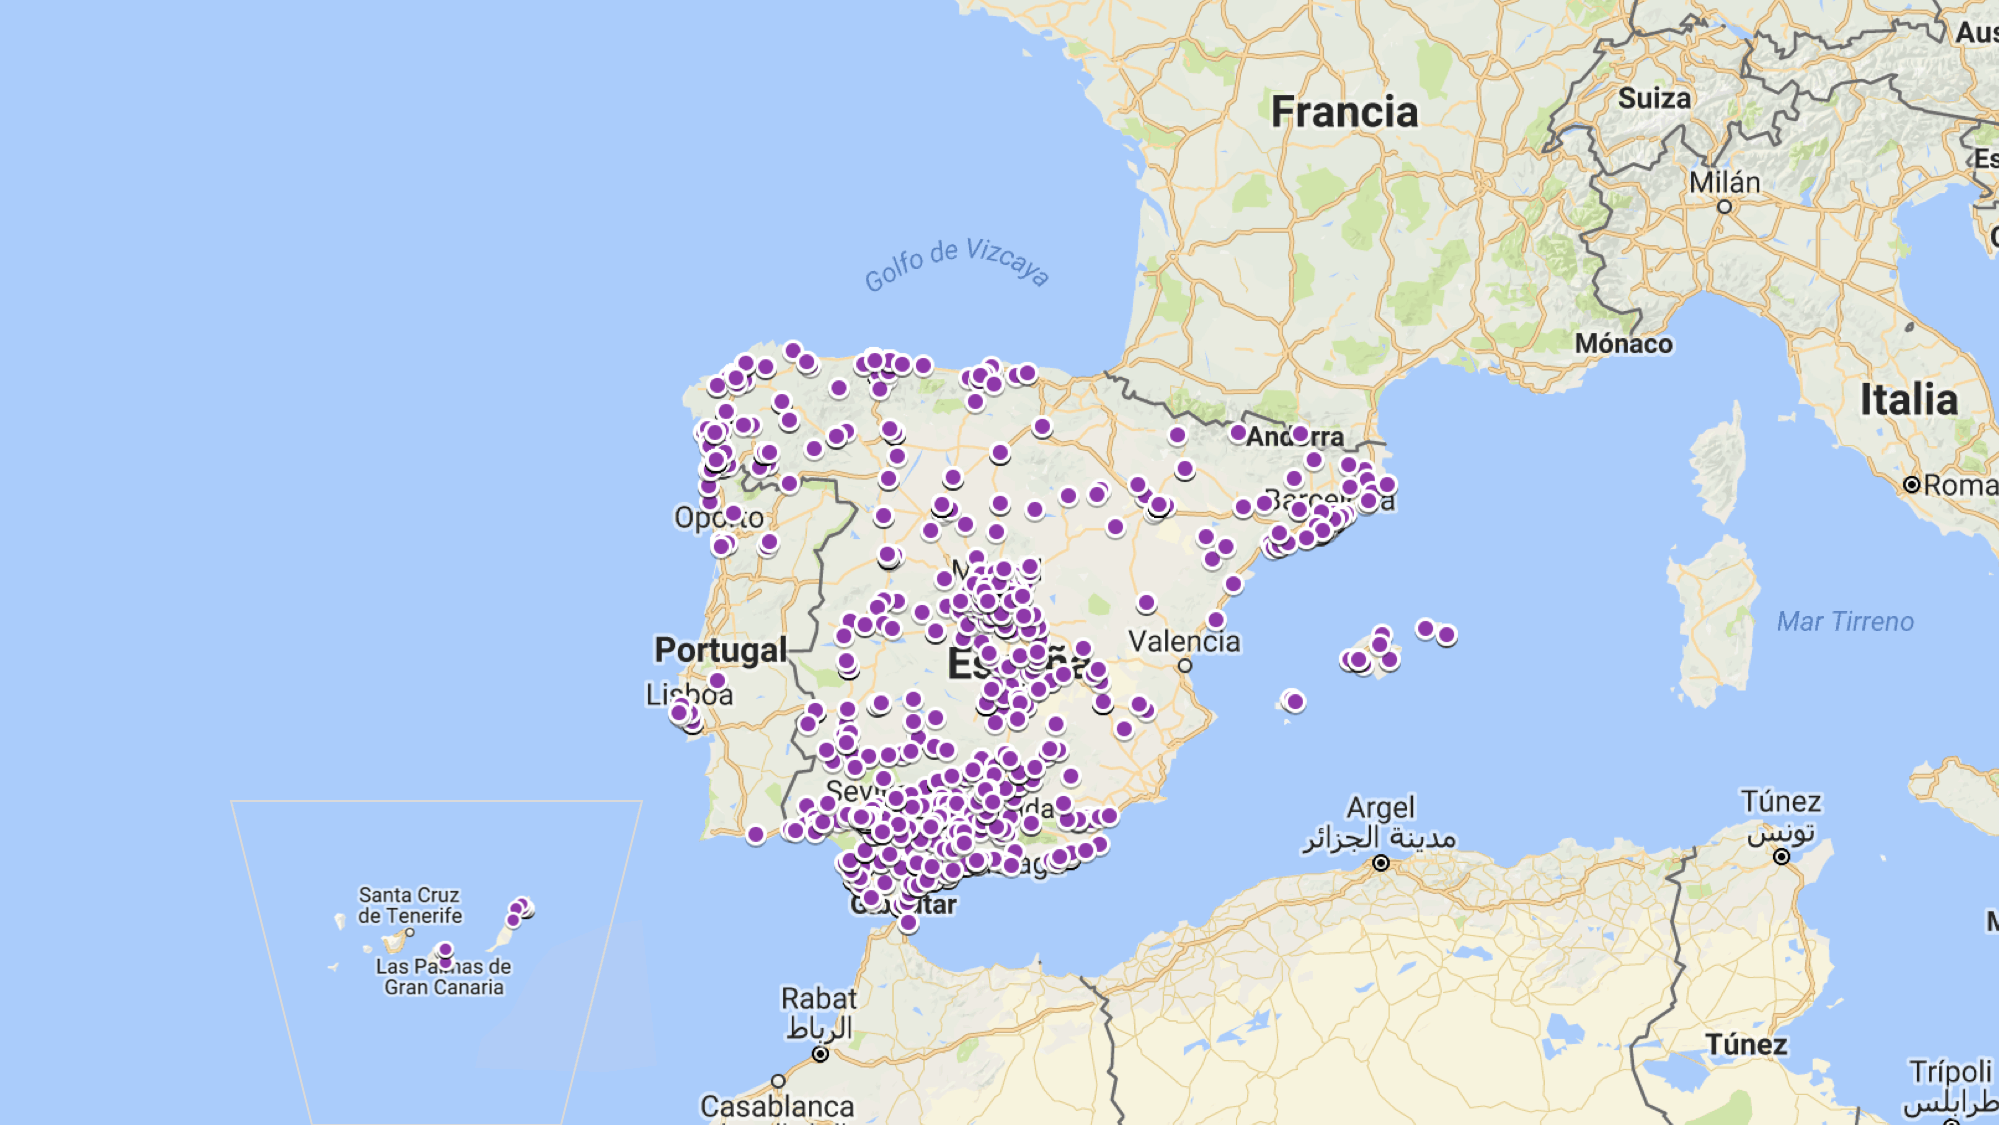 Mapa Trinity College España y Portugal